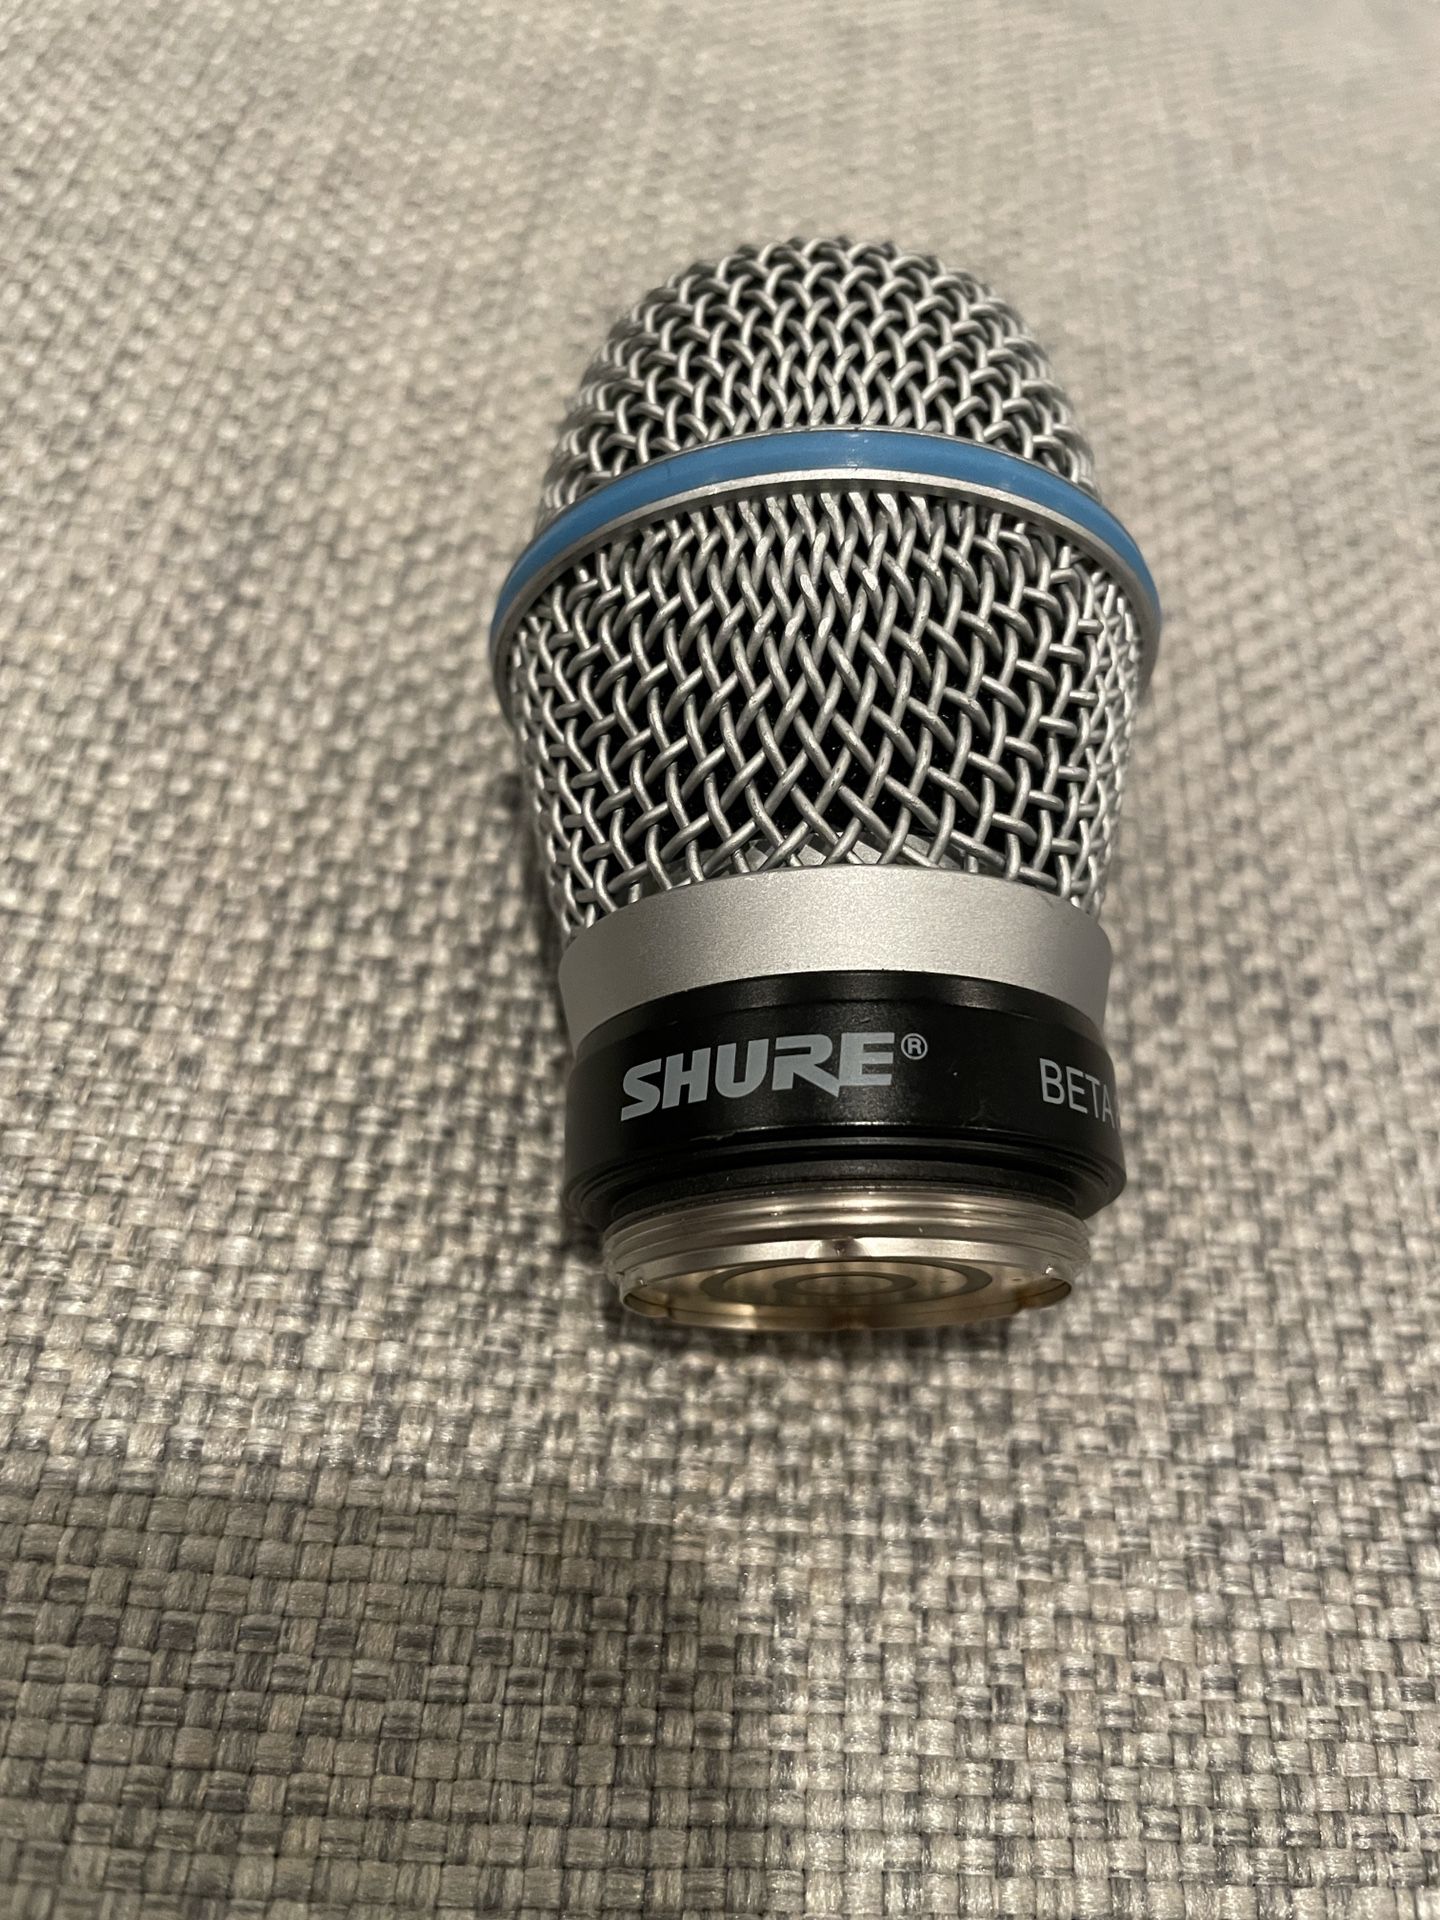 Shure Beta87a Wireless Microphone Capsule RPW120